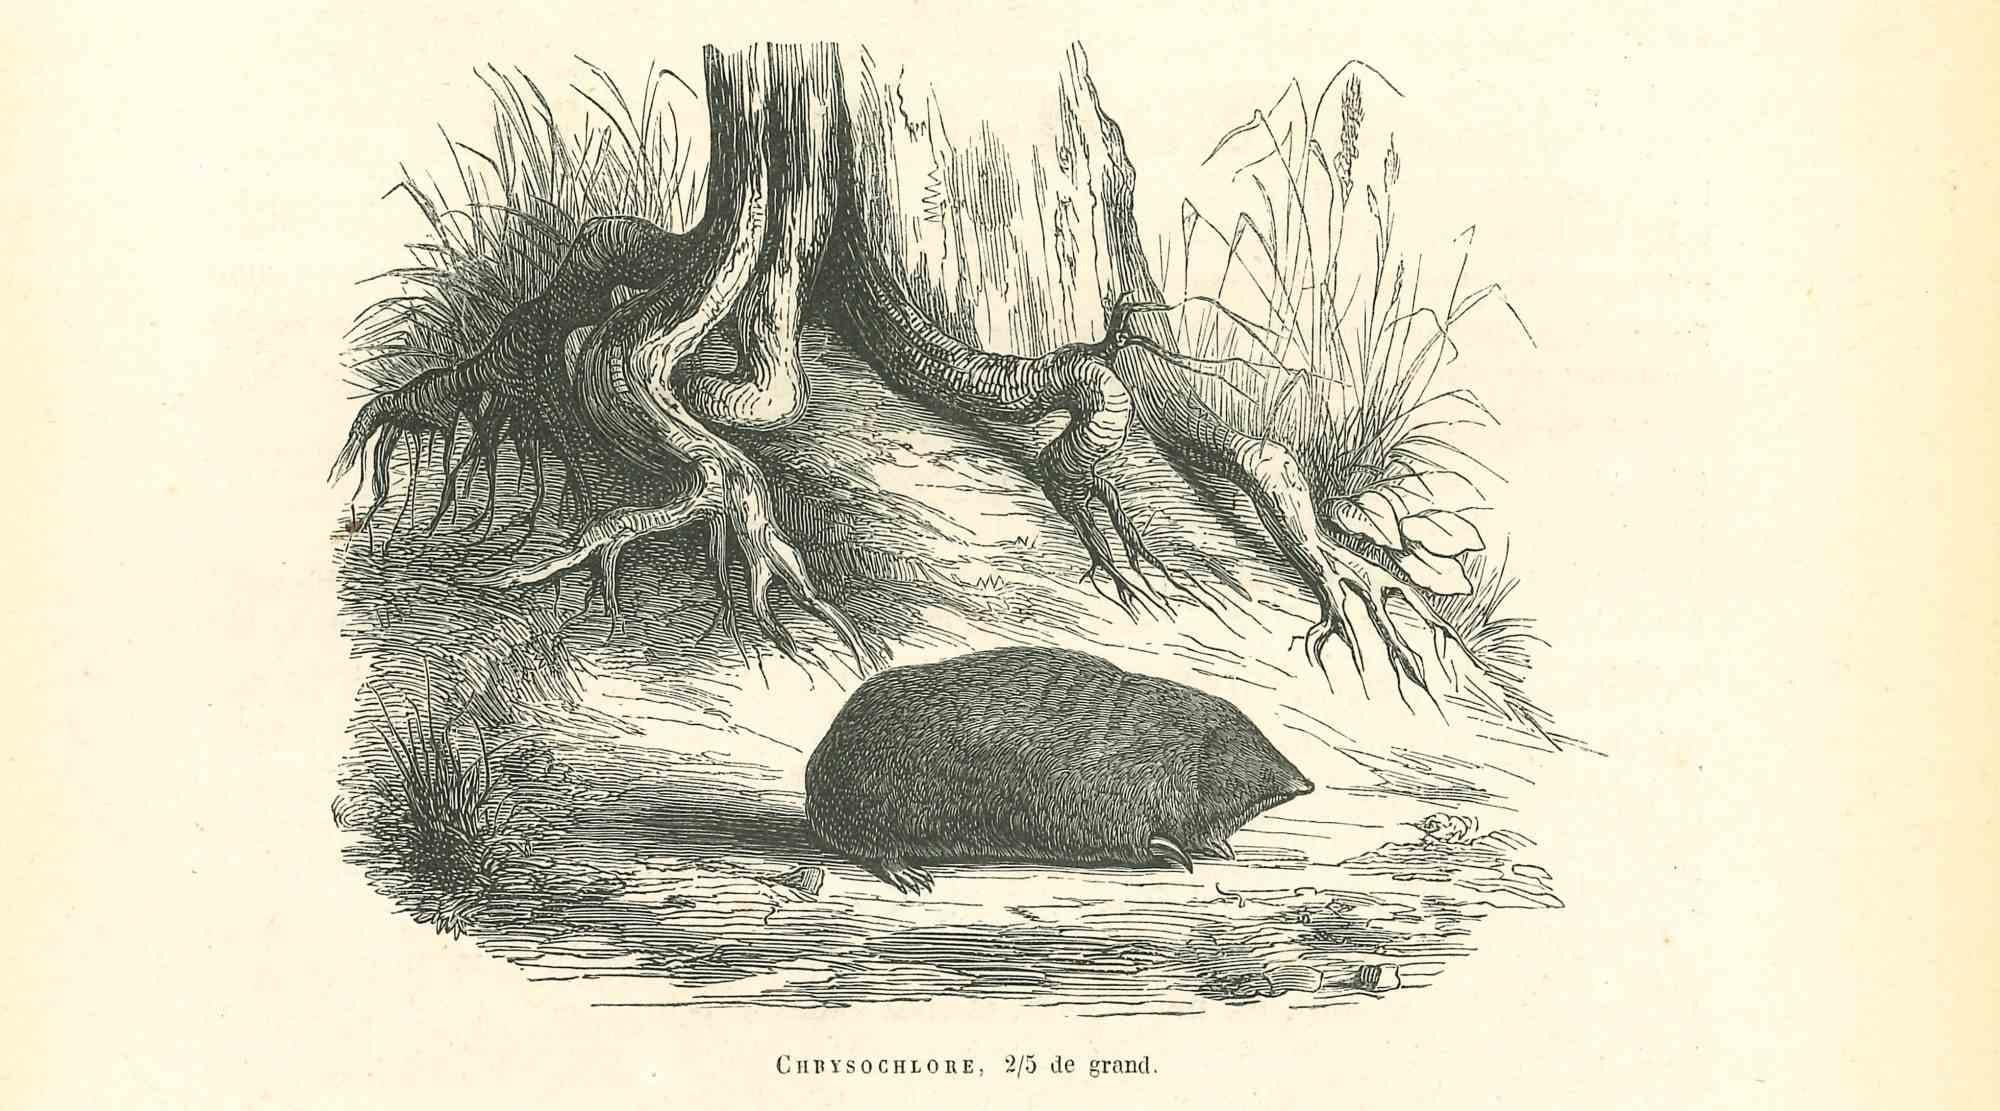 Chbysochlore - Original Lithograph by Paul Gervais - 1854